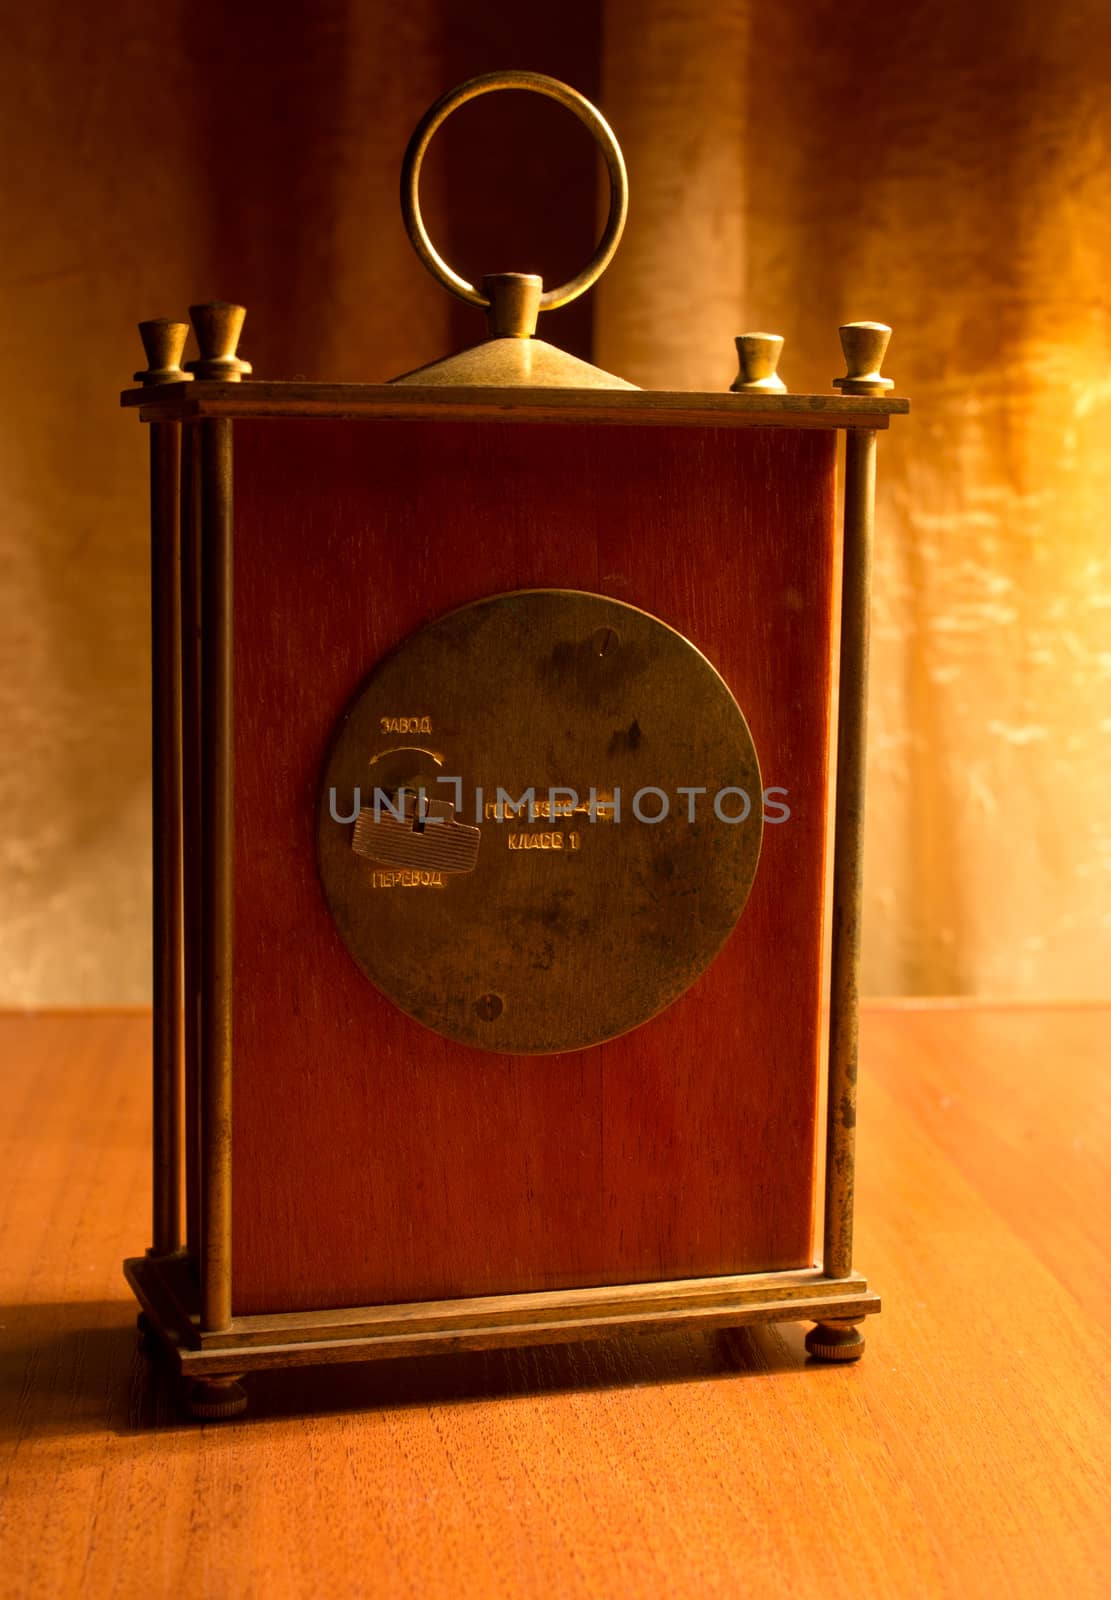 back side clock on wooden table by liwei12